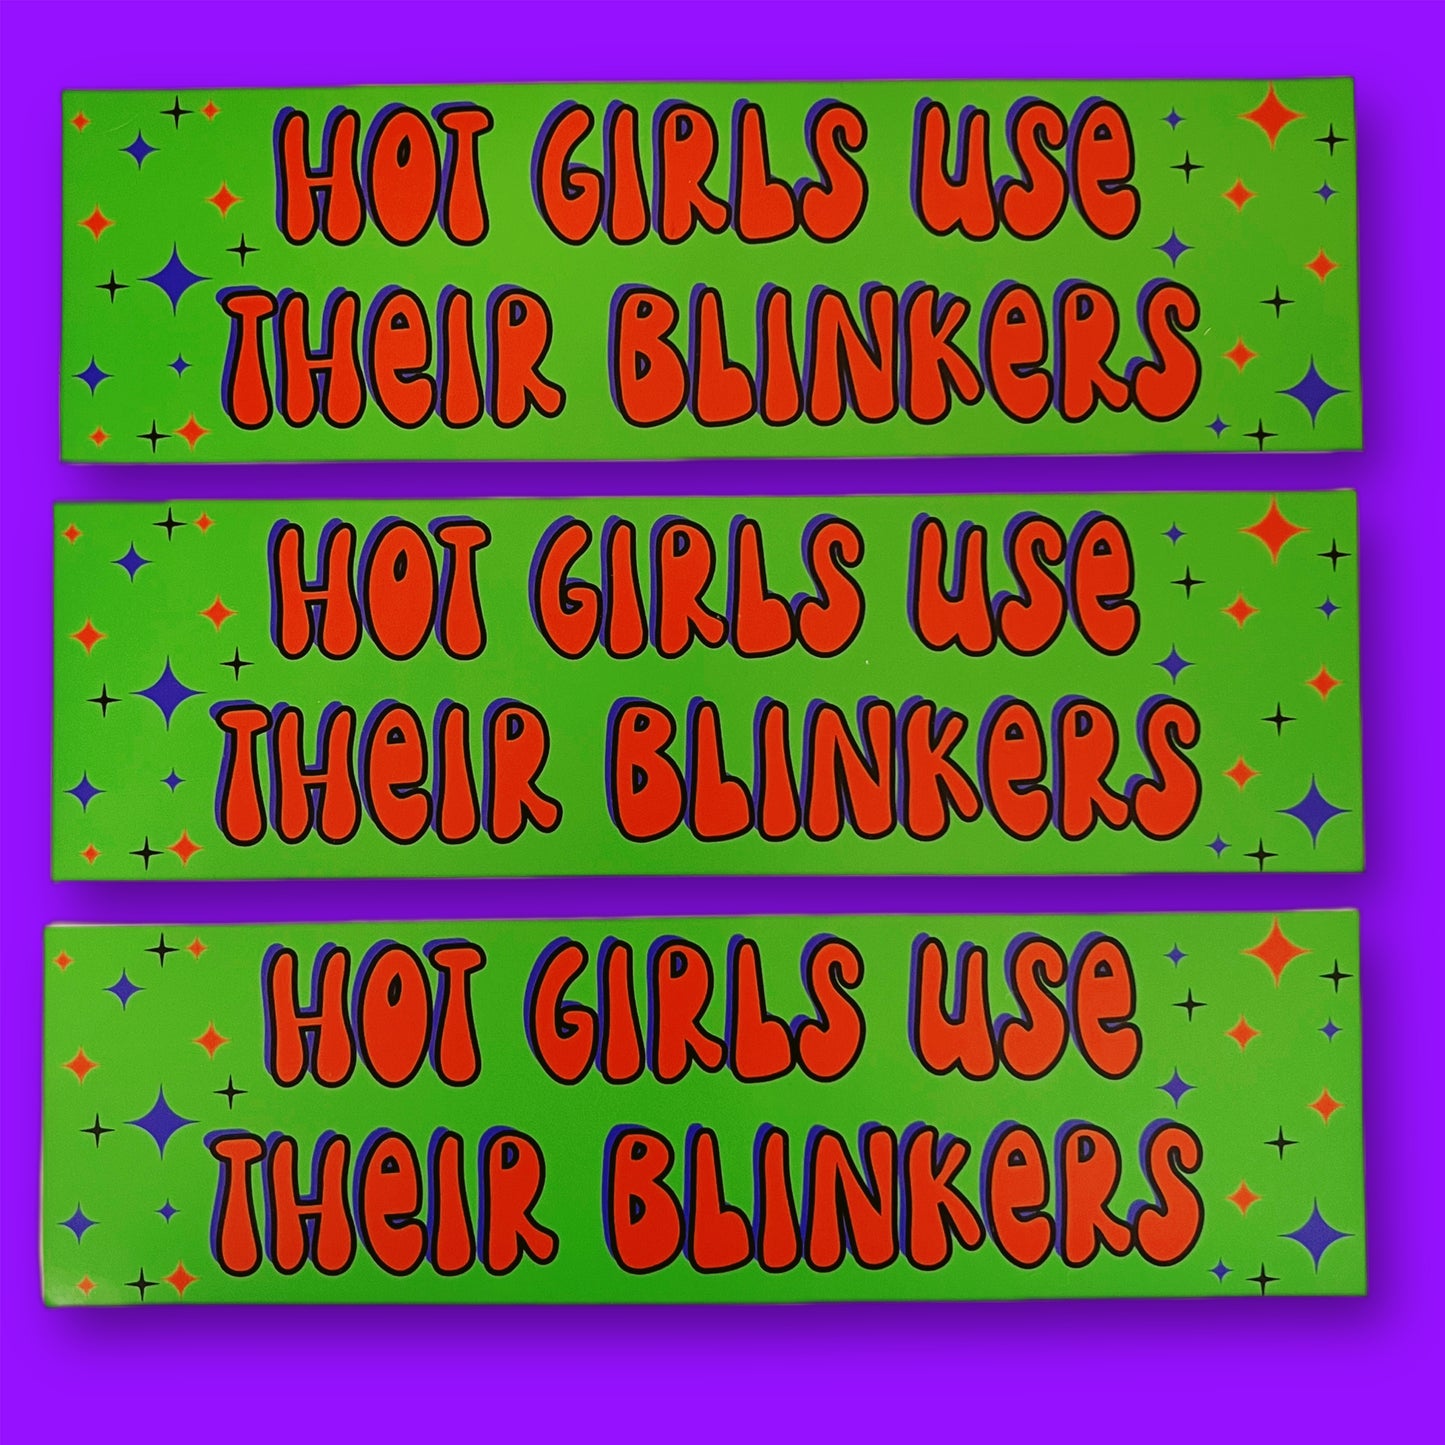 Hot girls use blinkers bumper sticker